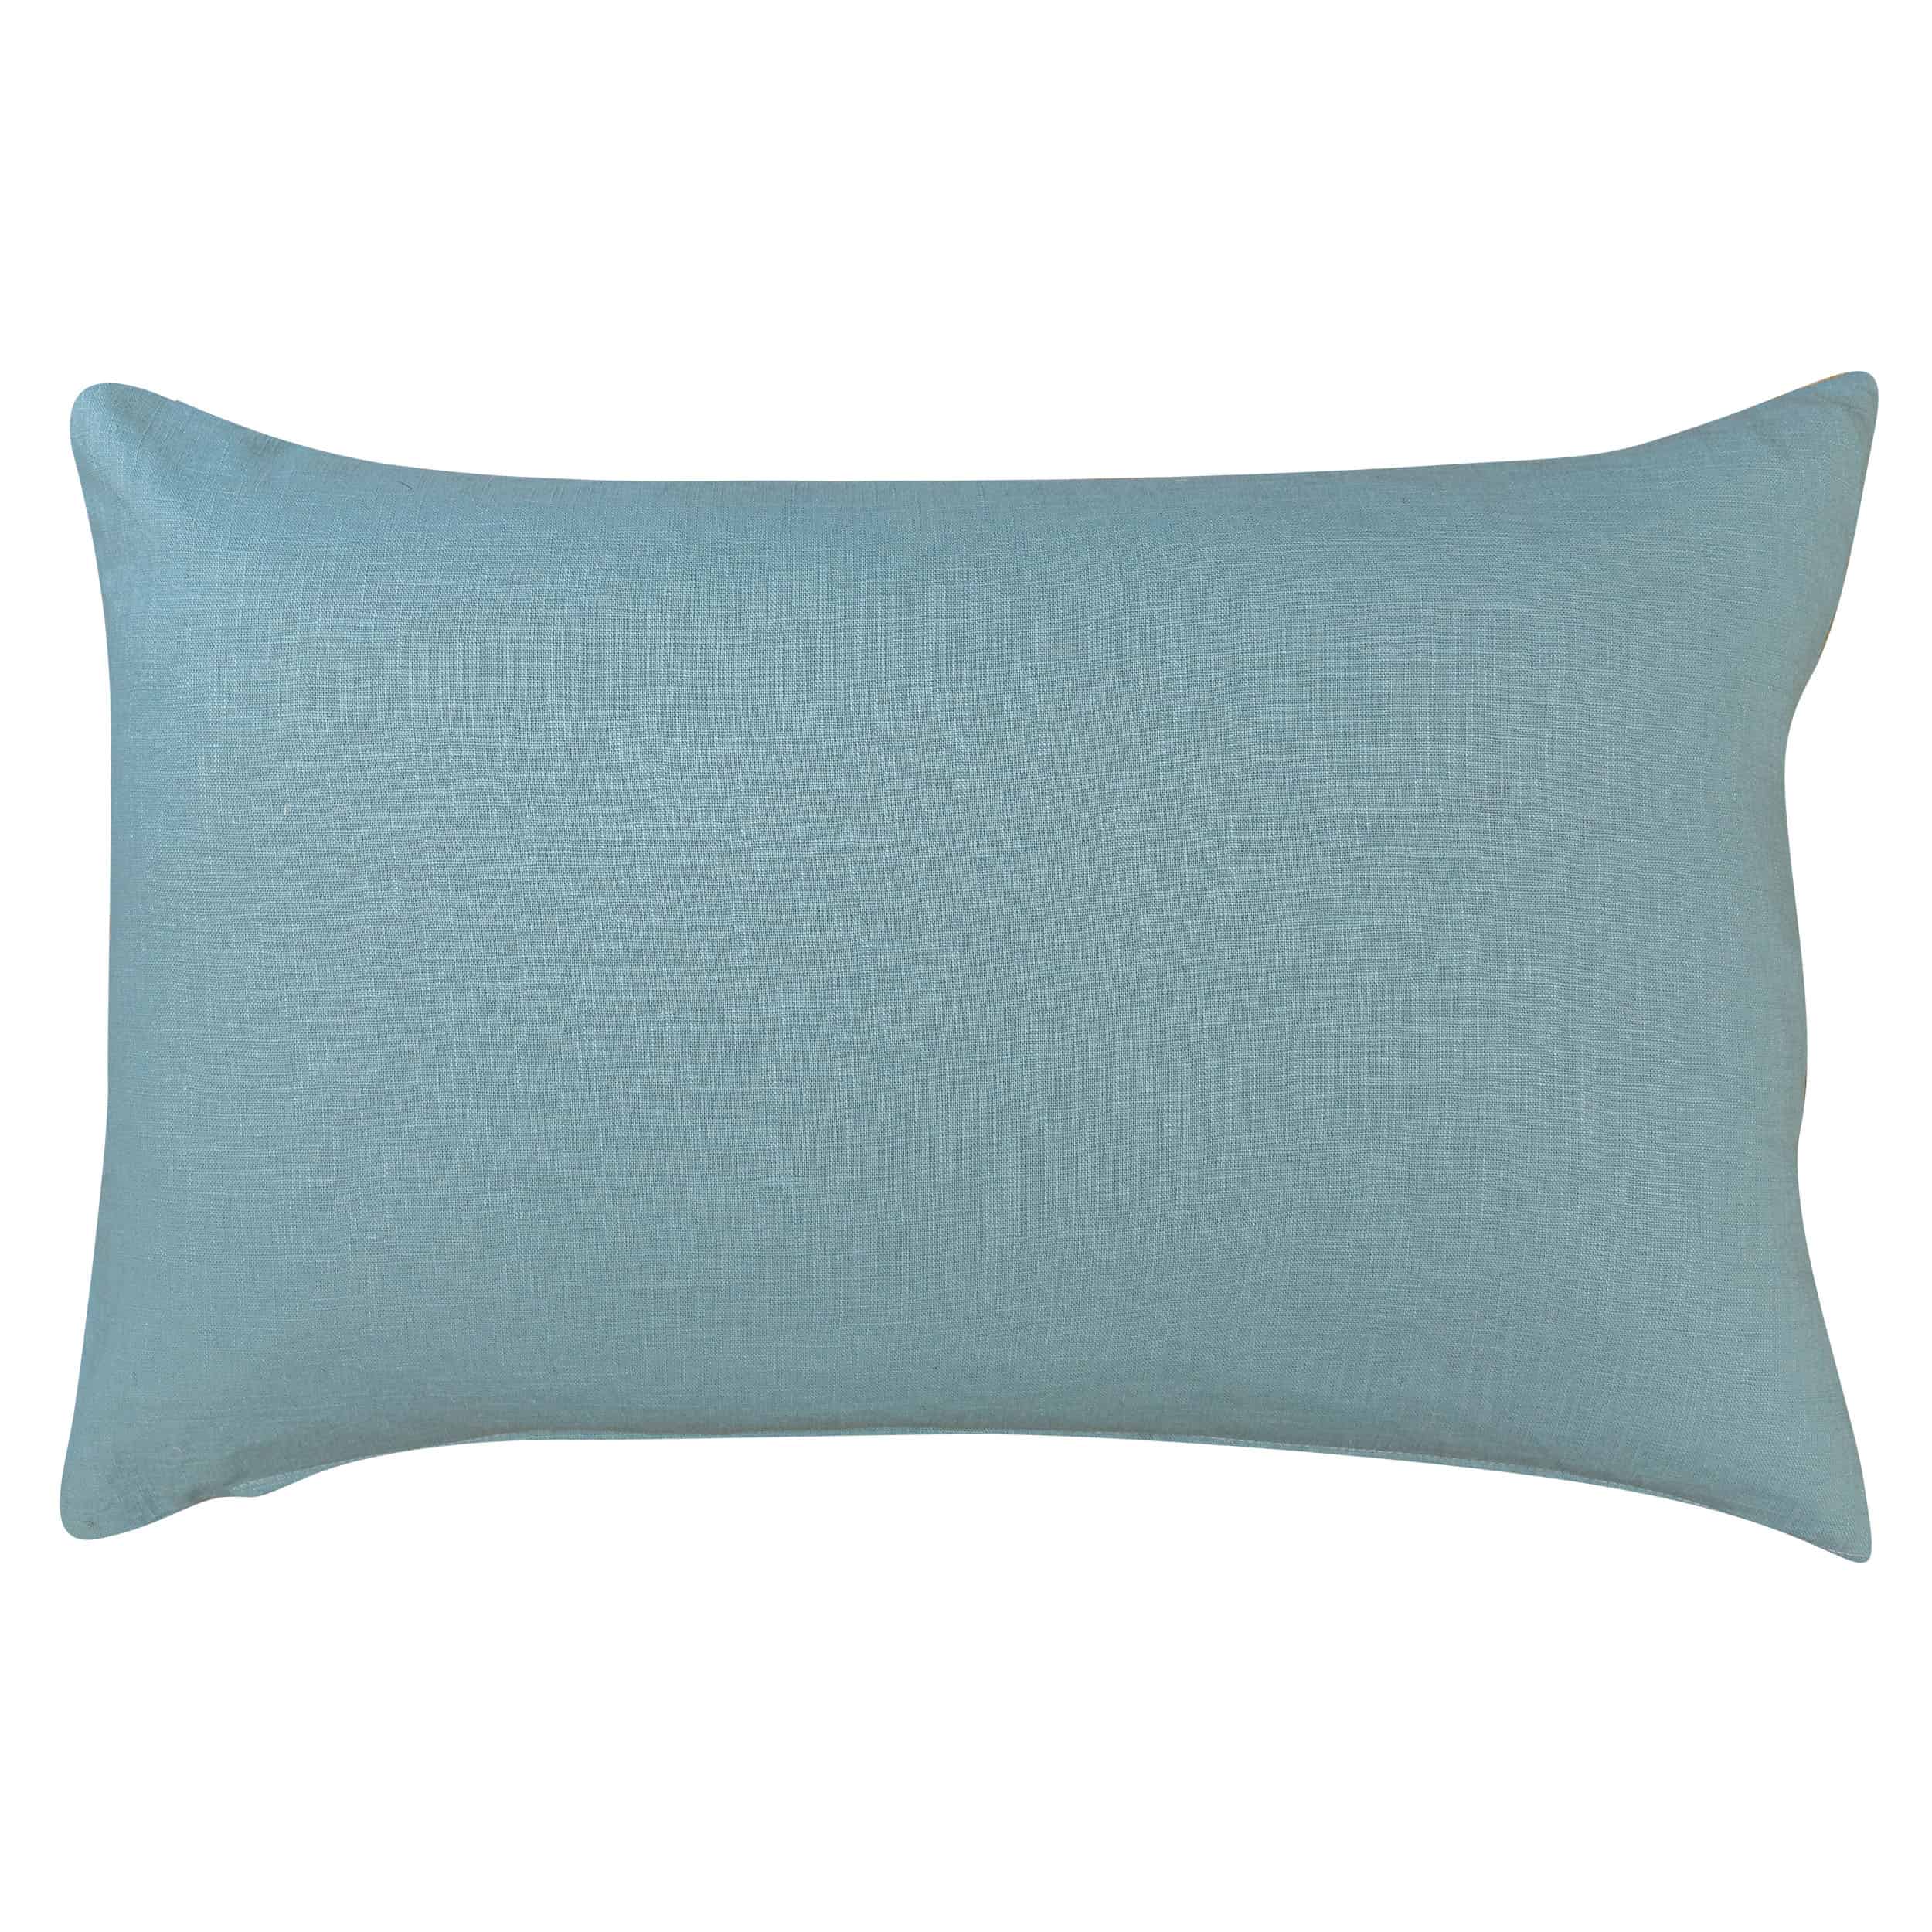 100% Linen Boudoir Cushion Cover in Aqua